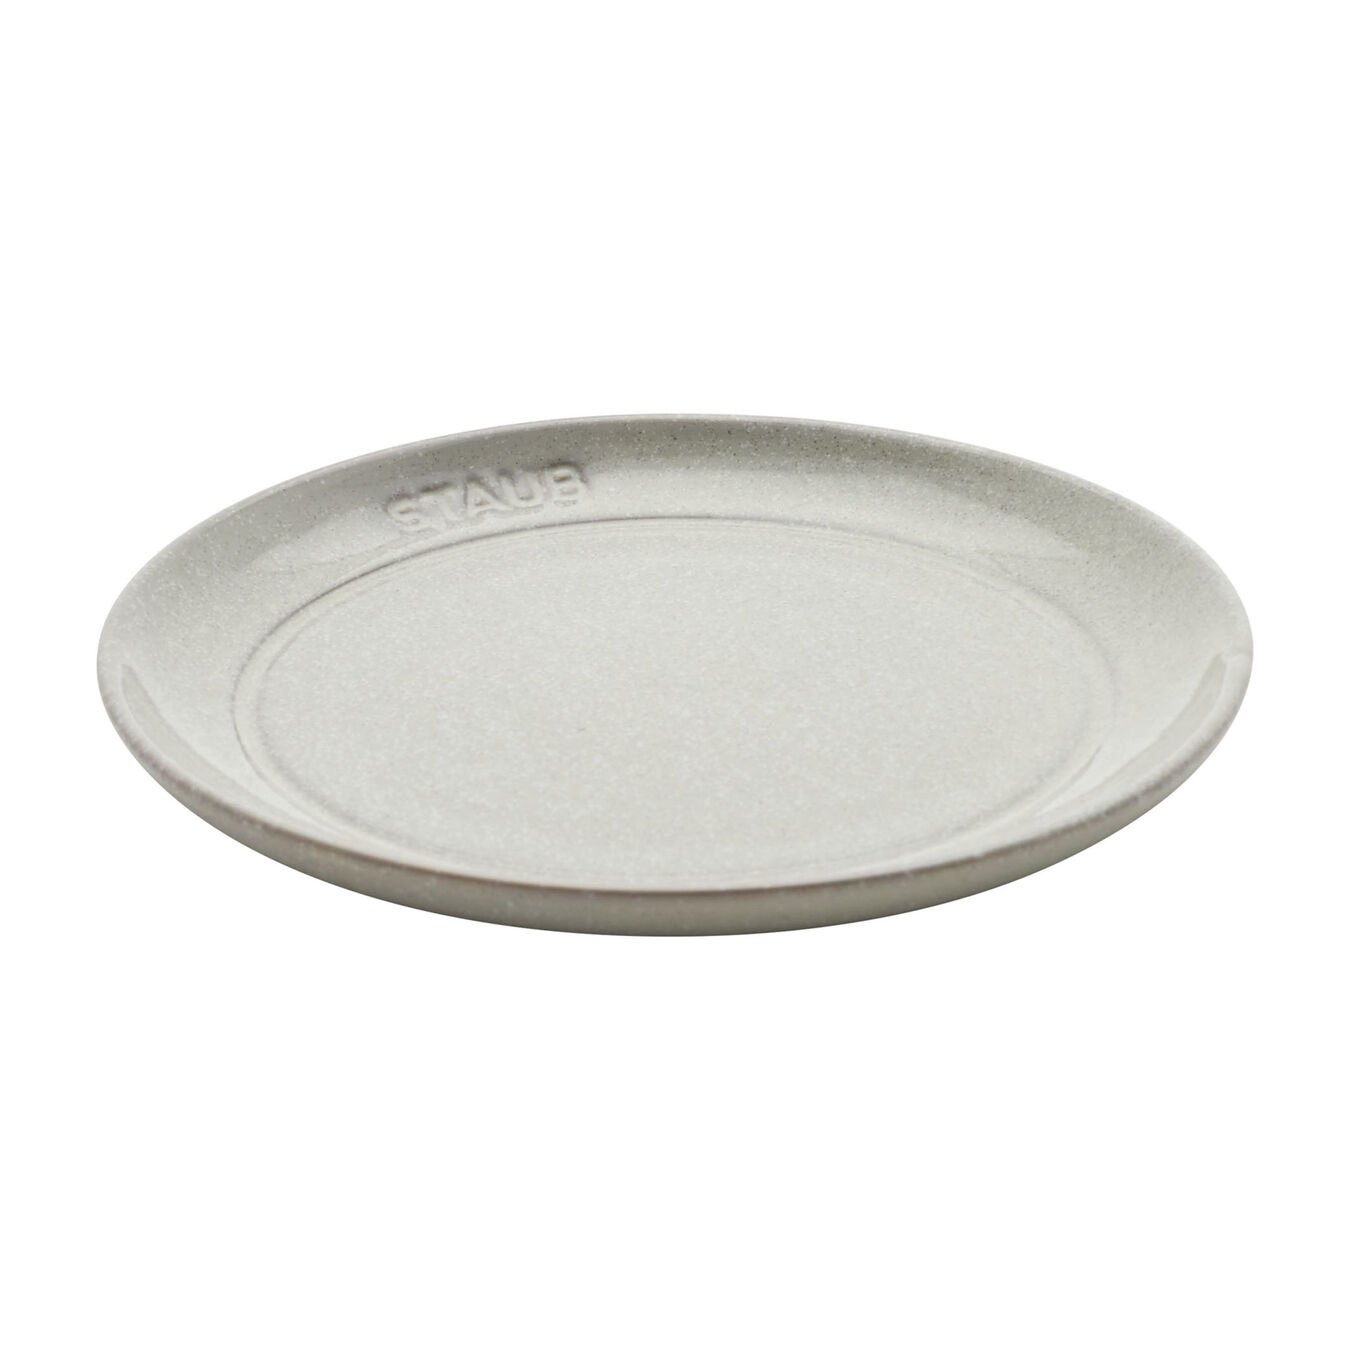 Appetizer Plate Set, 4 Piece | white truffle | ceramic,,large 2